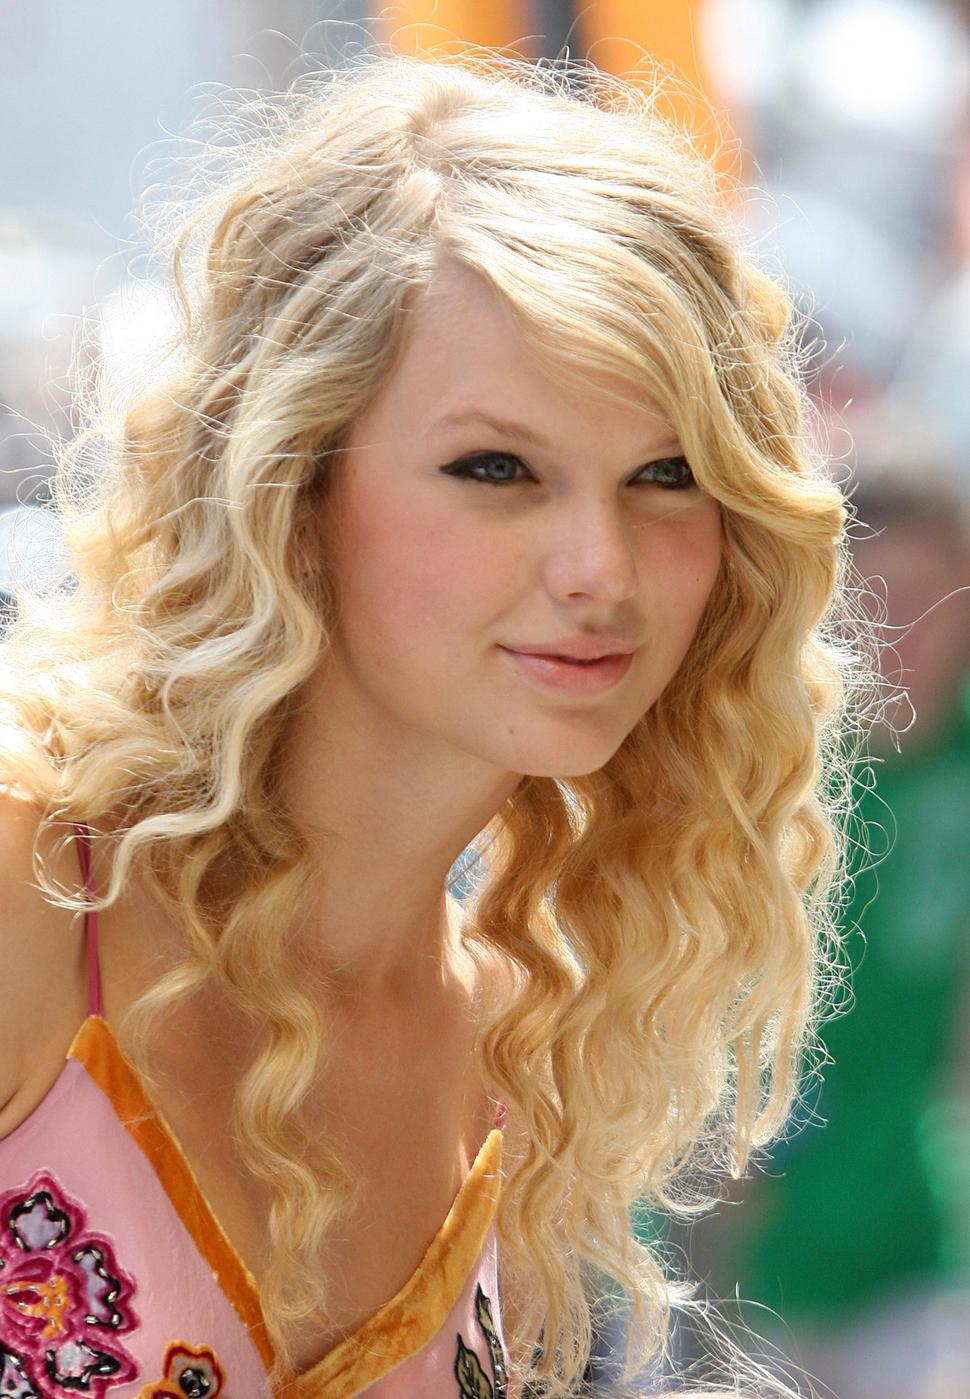 Taylor-Swift_1.jpg